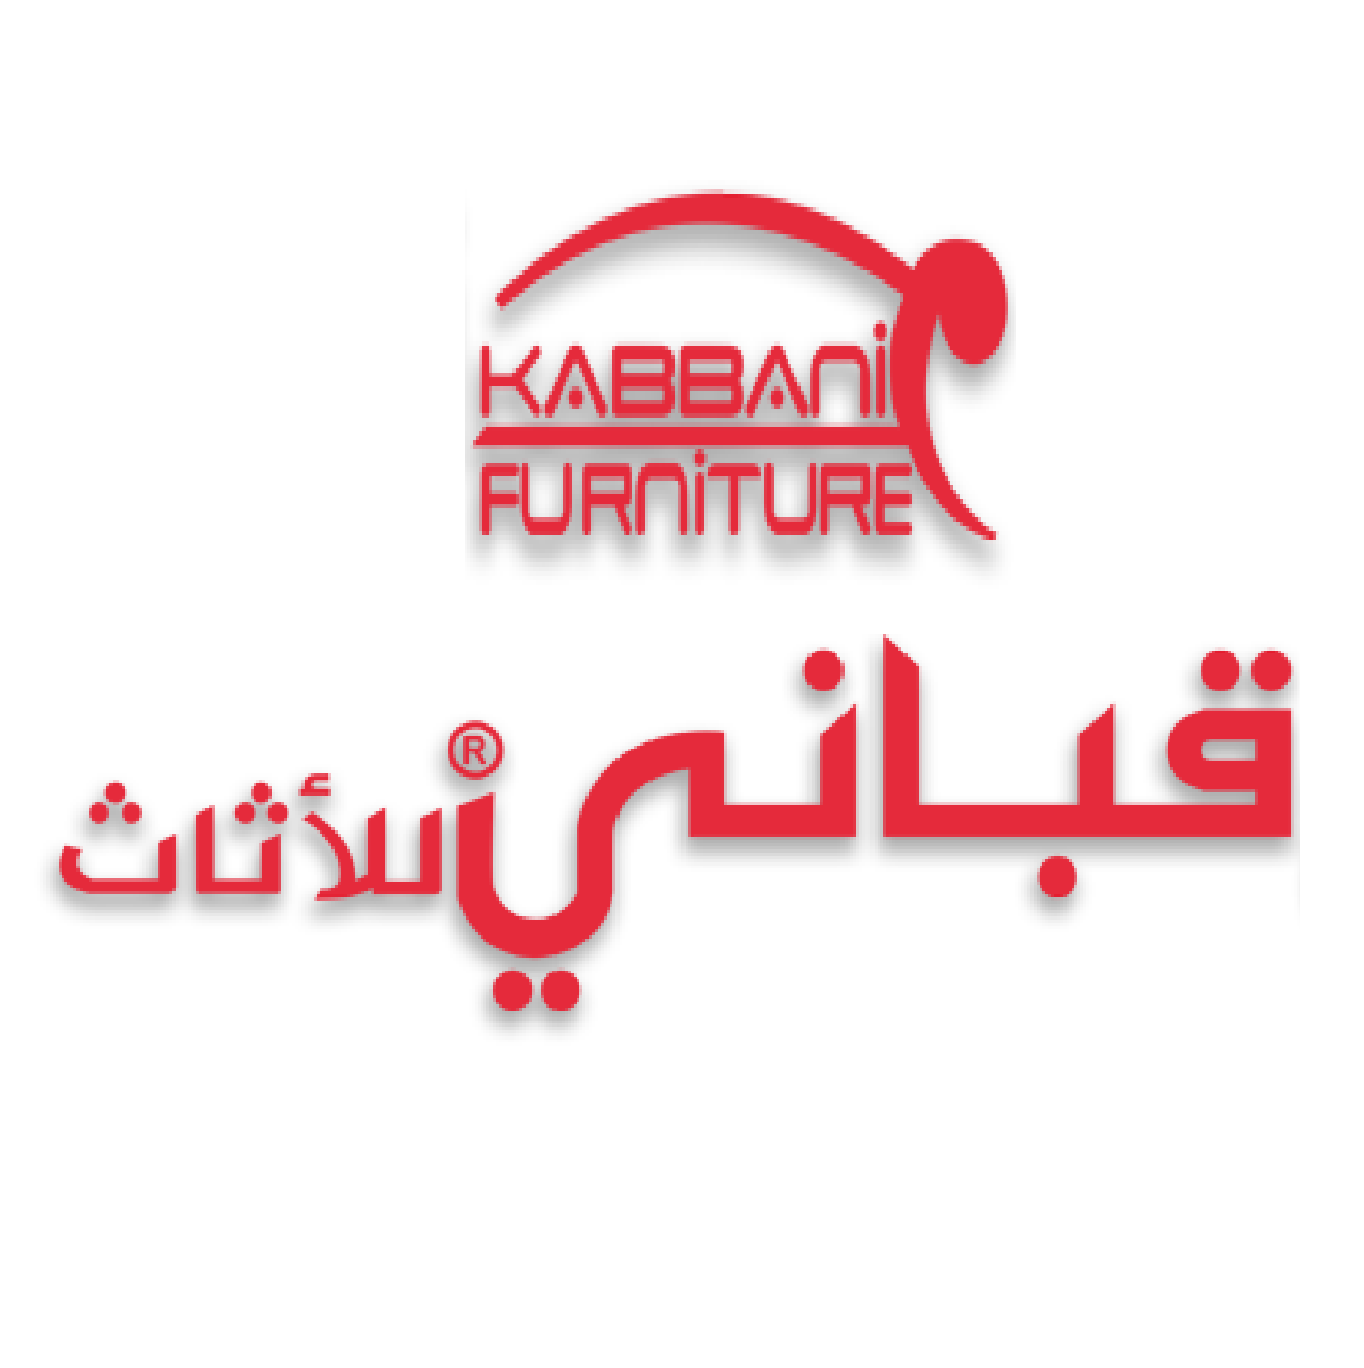 kabbani furniture company